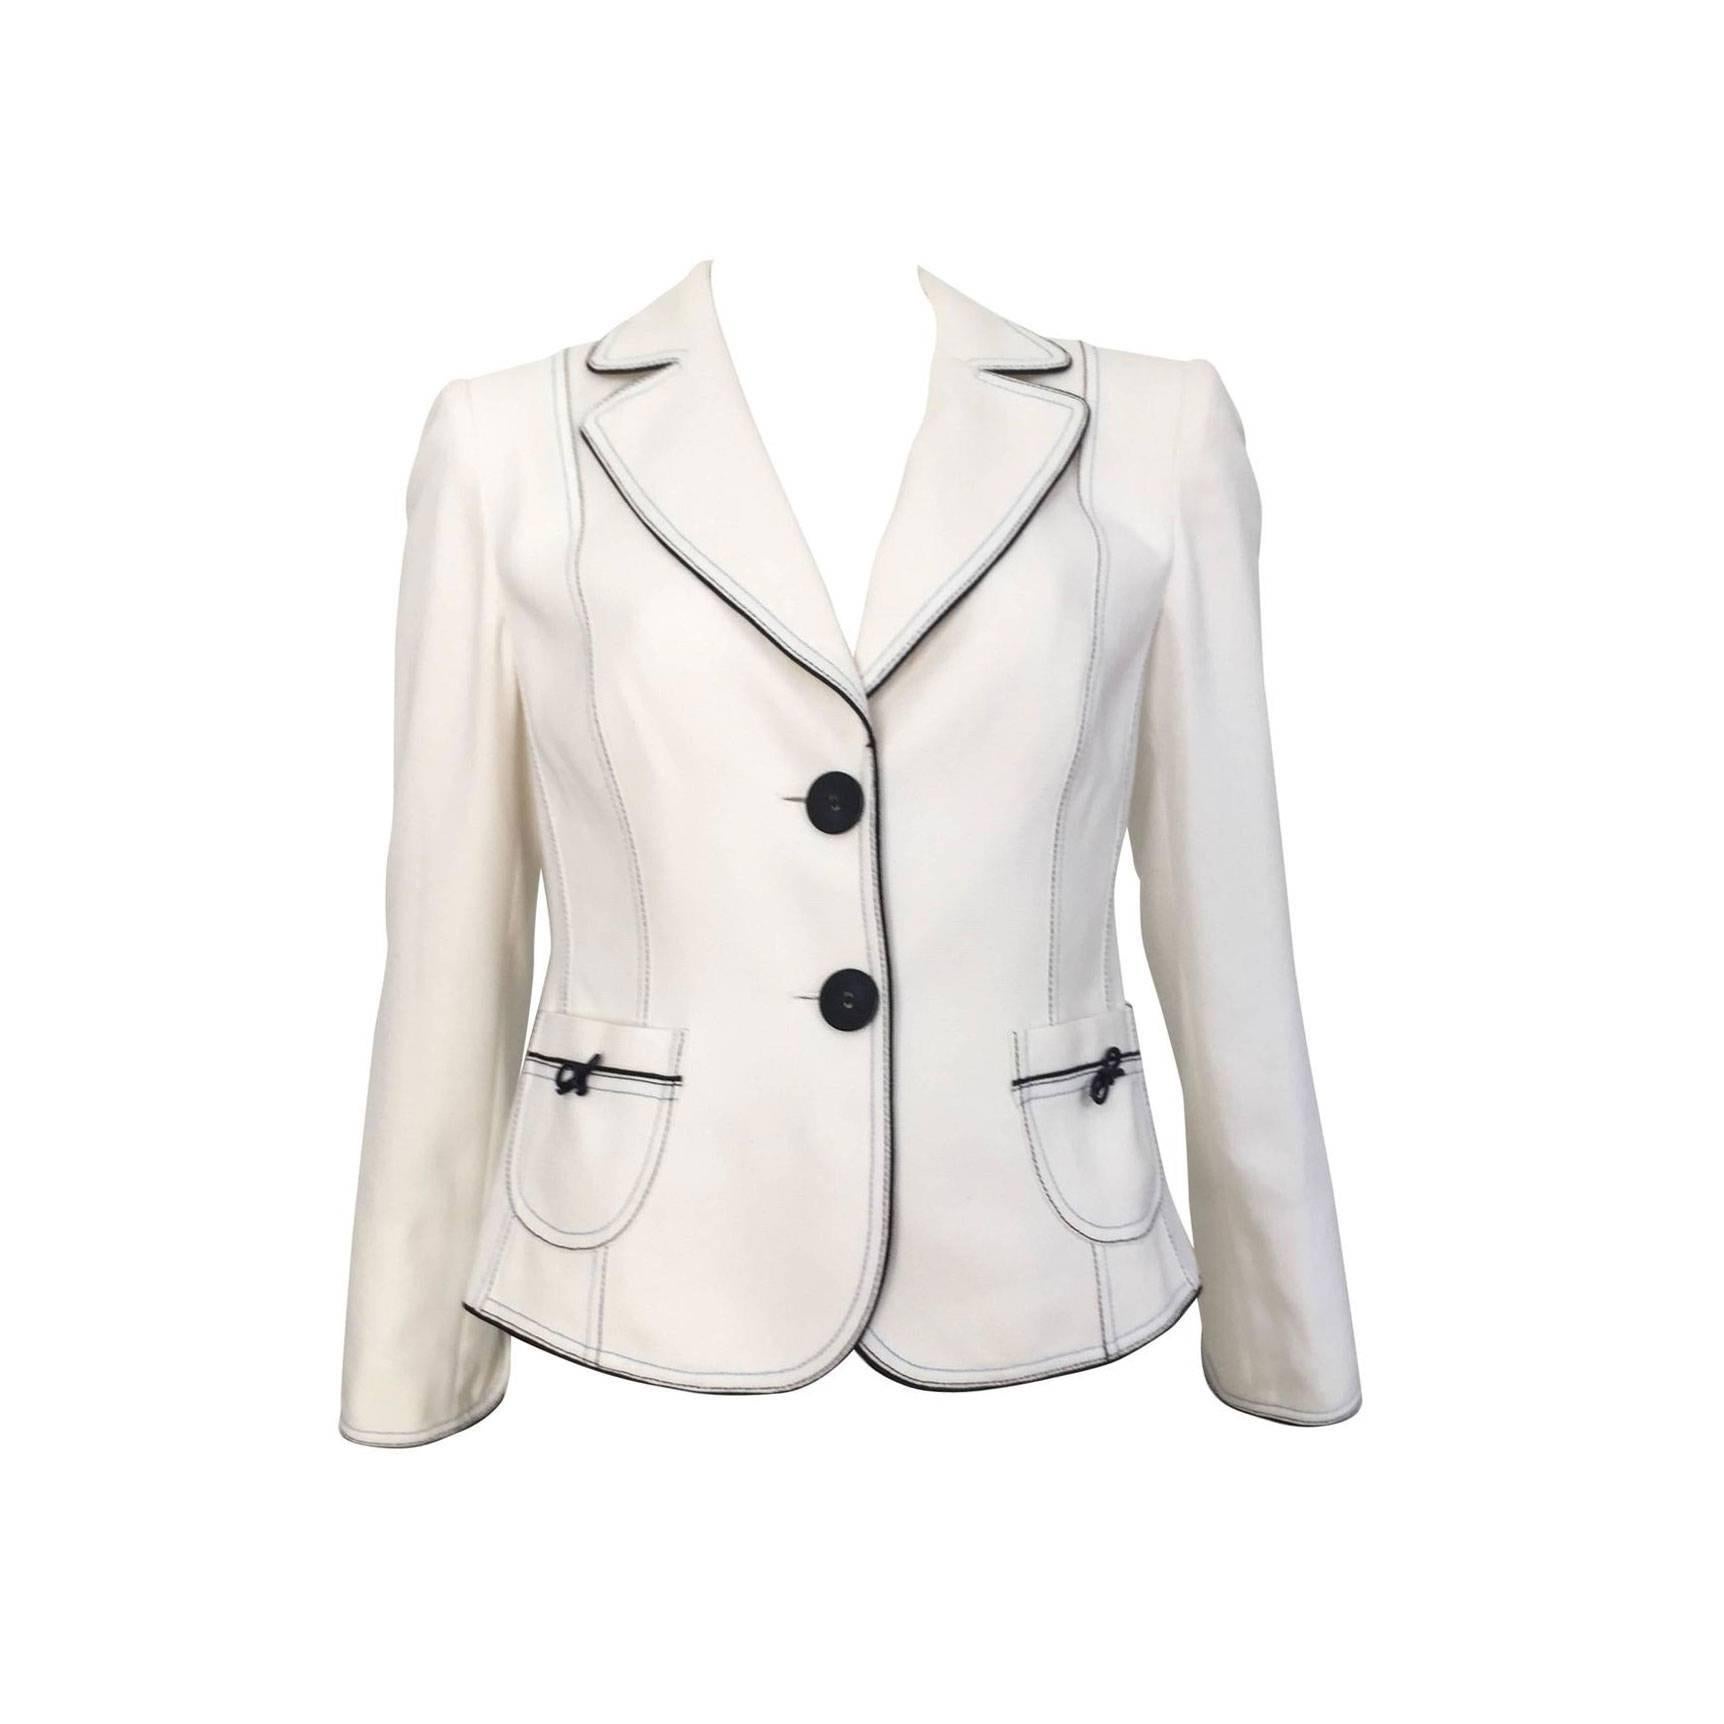 Biba White Cotton Jacket size 6.  For Sale